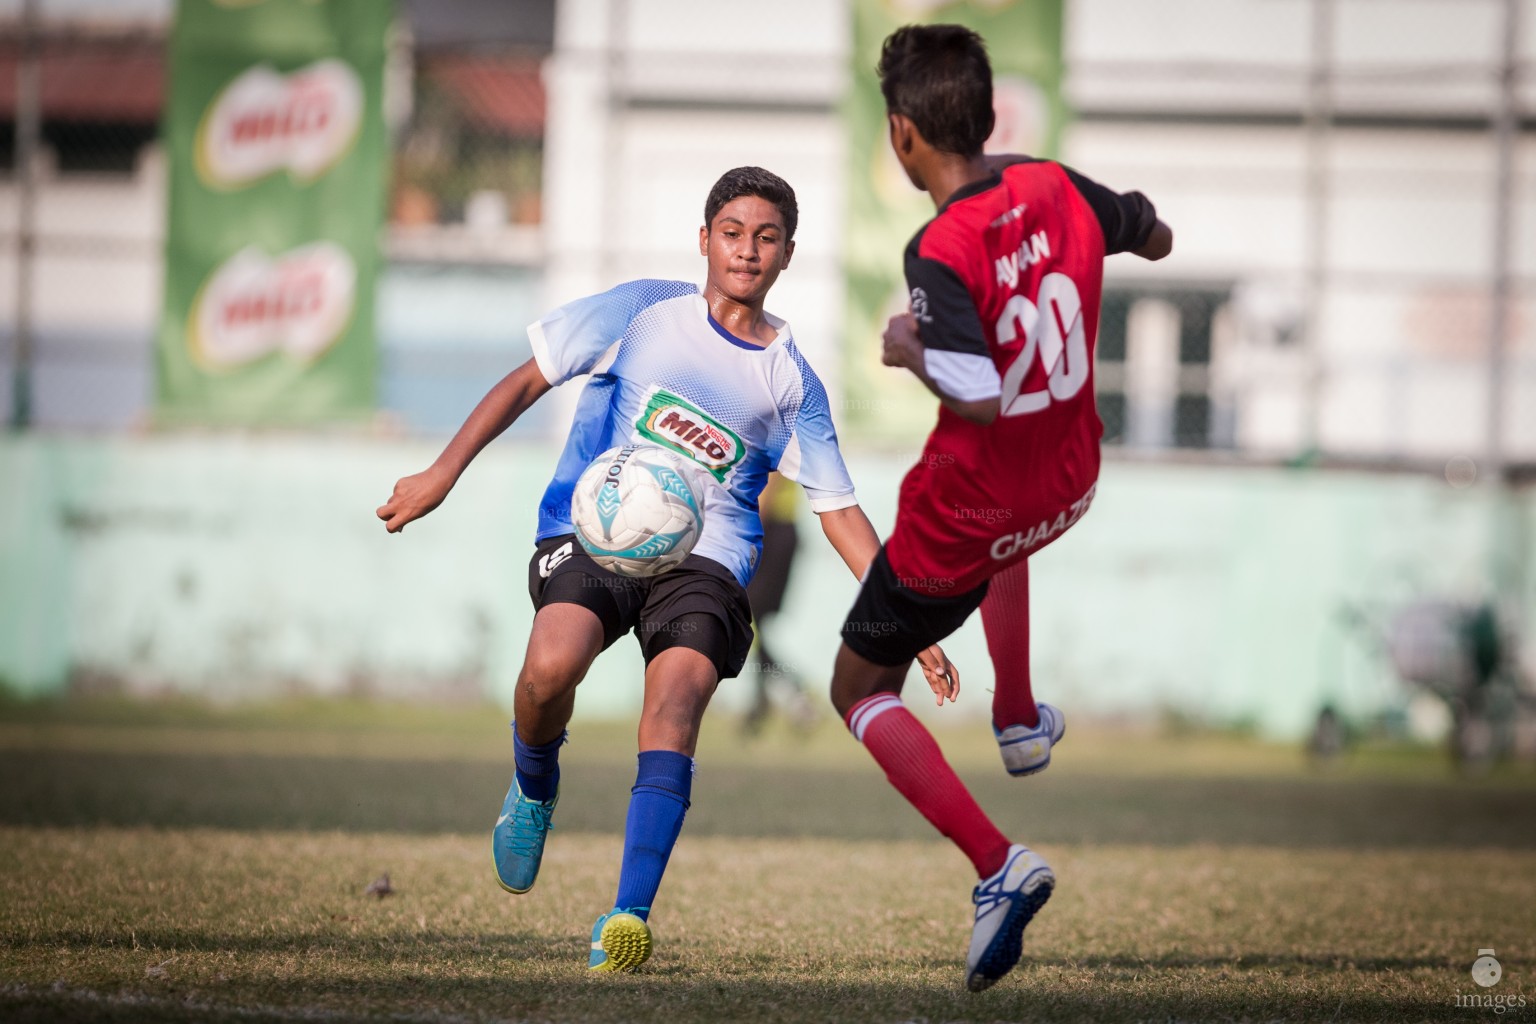 MILO Interschool Football Tournament 2018 / U16 (Ghaazee School vs Dharumavantha School